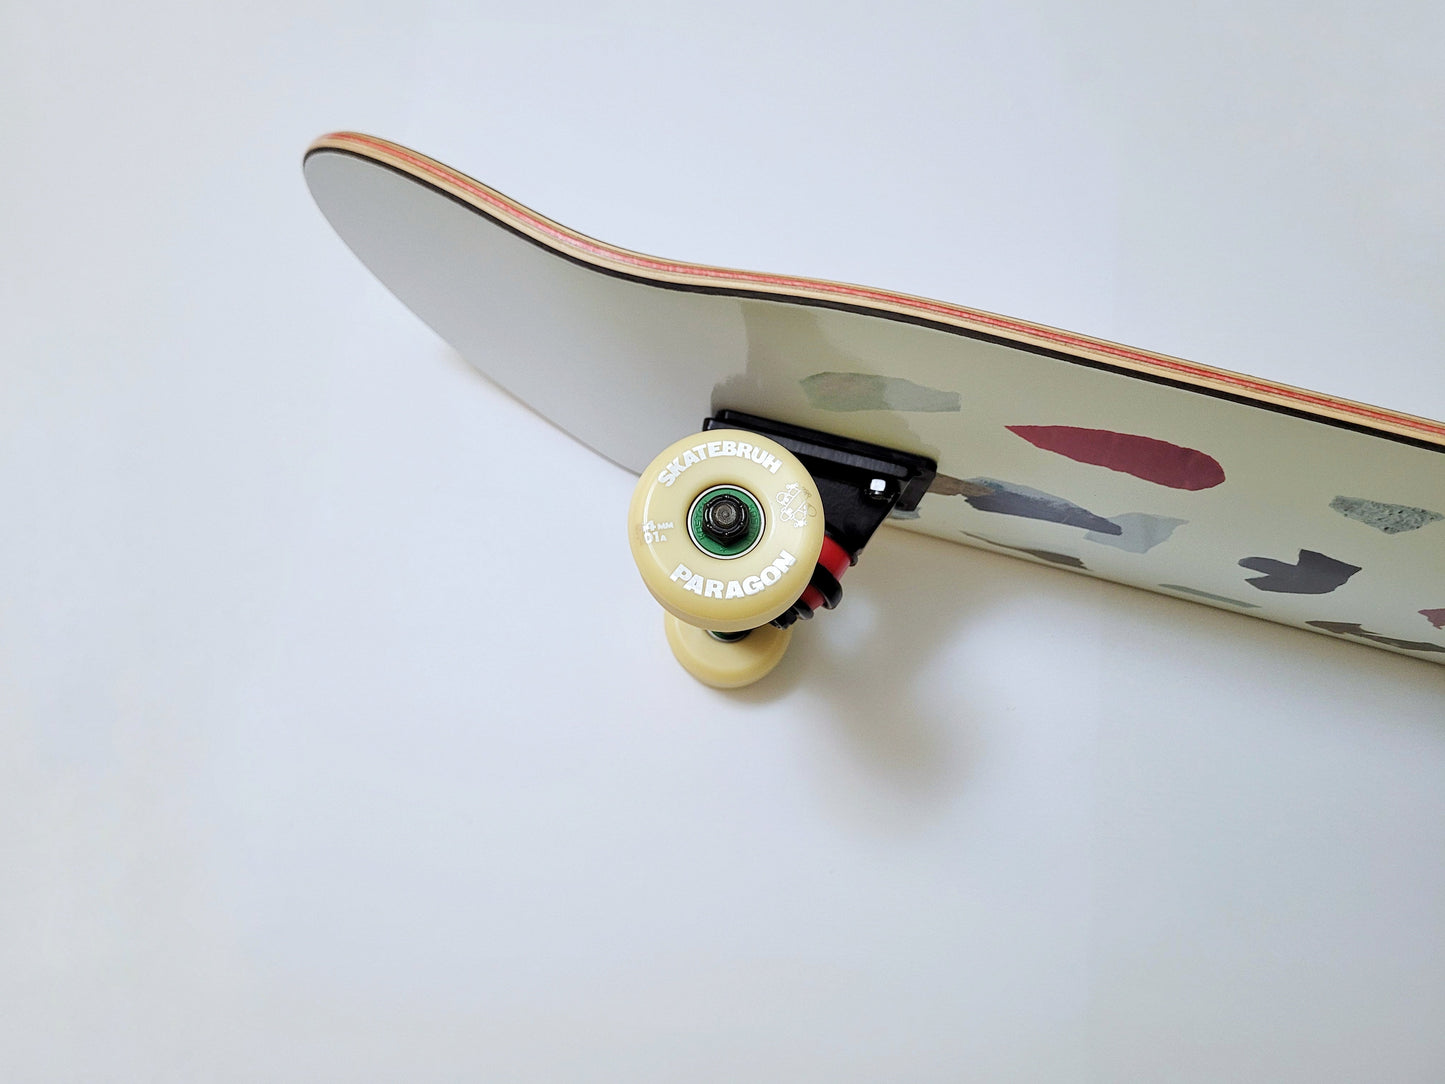 Poetic Collage skateboard - SkatebruhSG